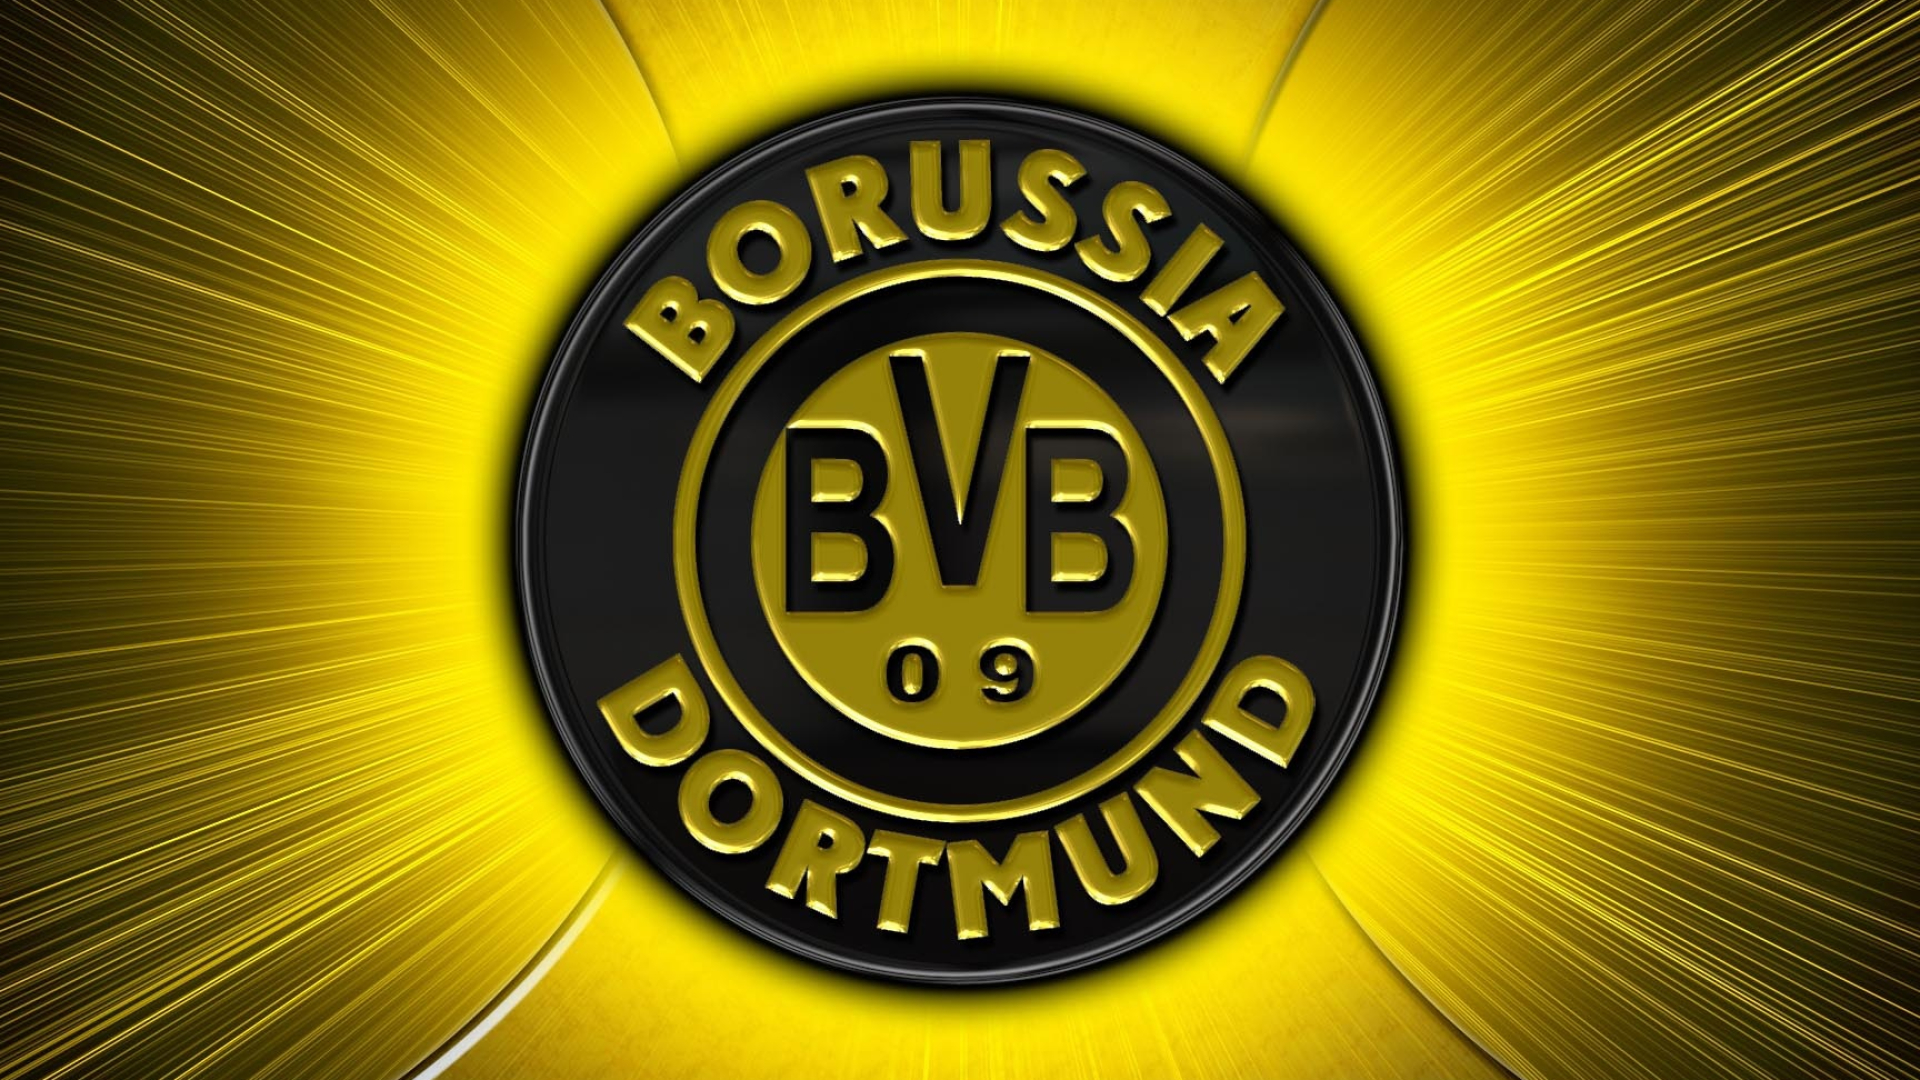 Borussia Dortmund: One of Germany's biggest clubs. 1920x1080 Full HD Wallpaper.